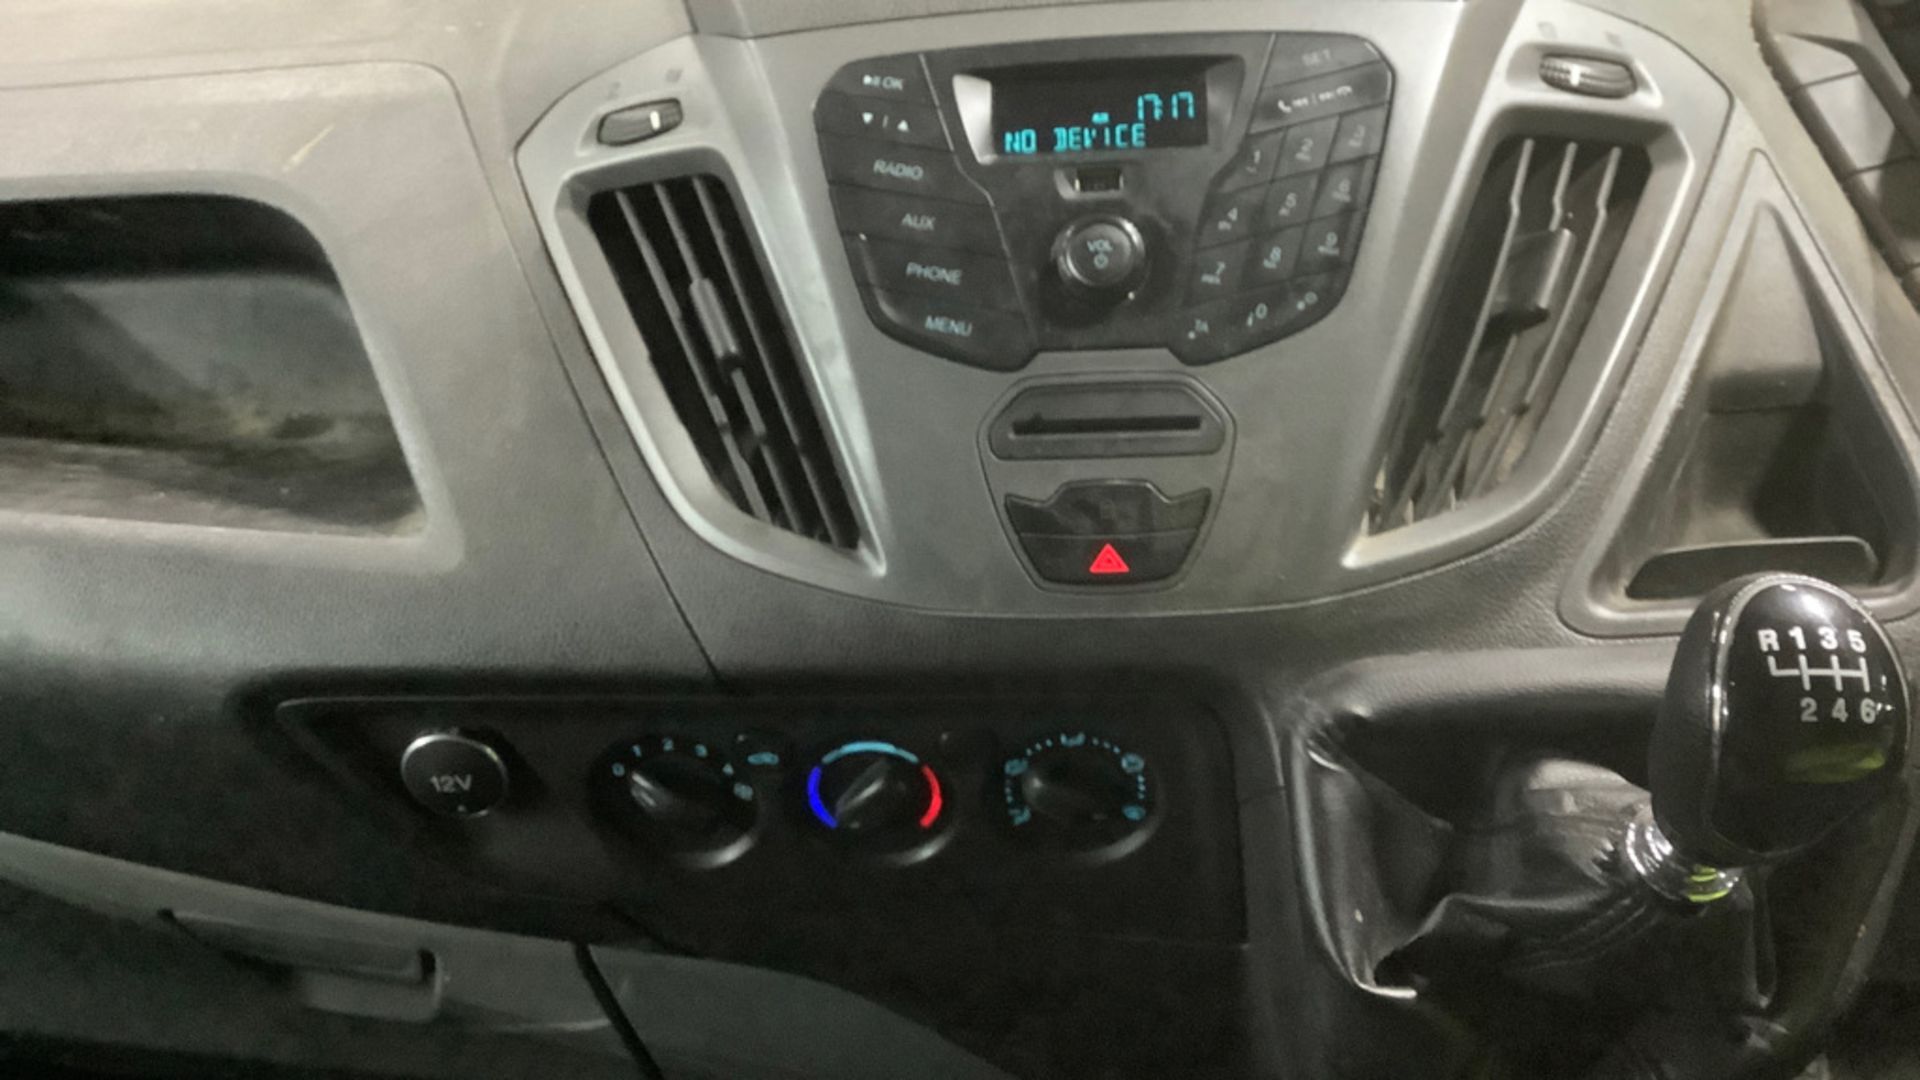 ** ON SALE ** Ford Transit Custom 2.2 TDCI 100 270 L1 H1 2015 '65 Reg' Panel Van - Image 7 of 9